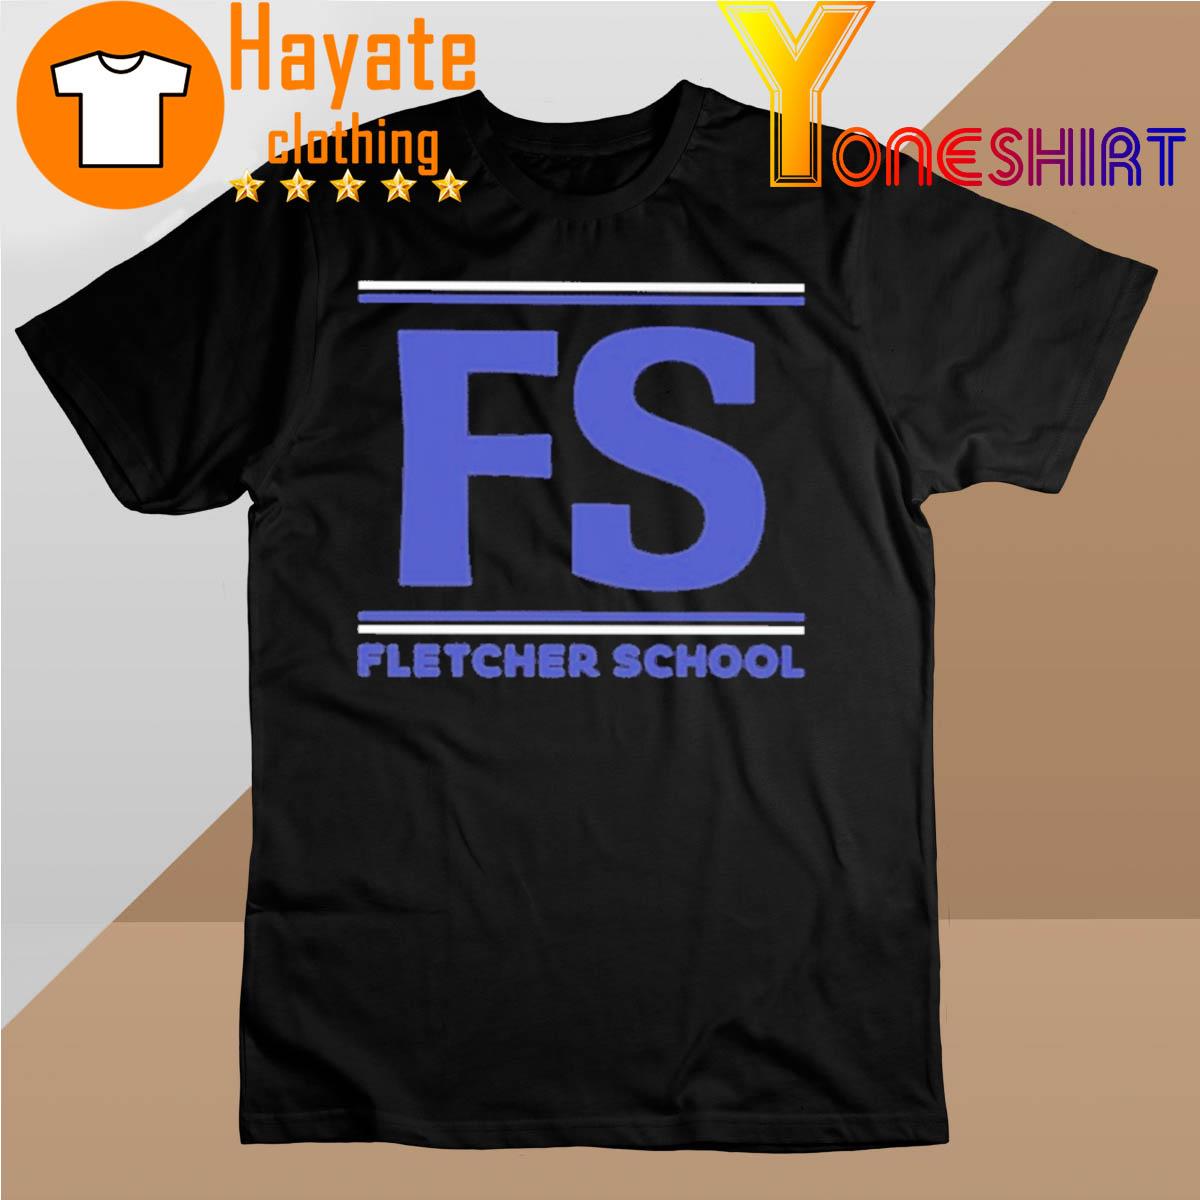 FS Fletcher School Shirt